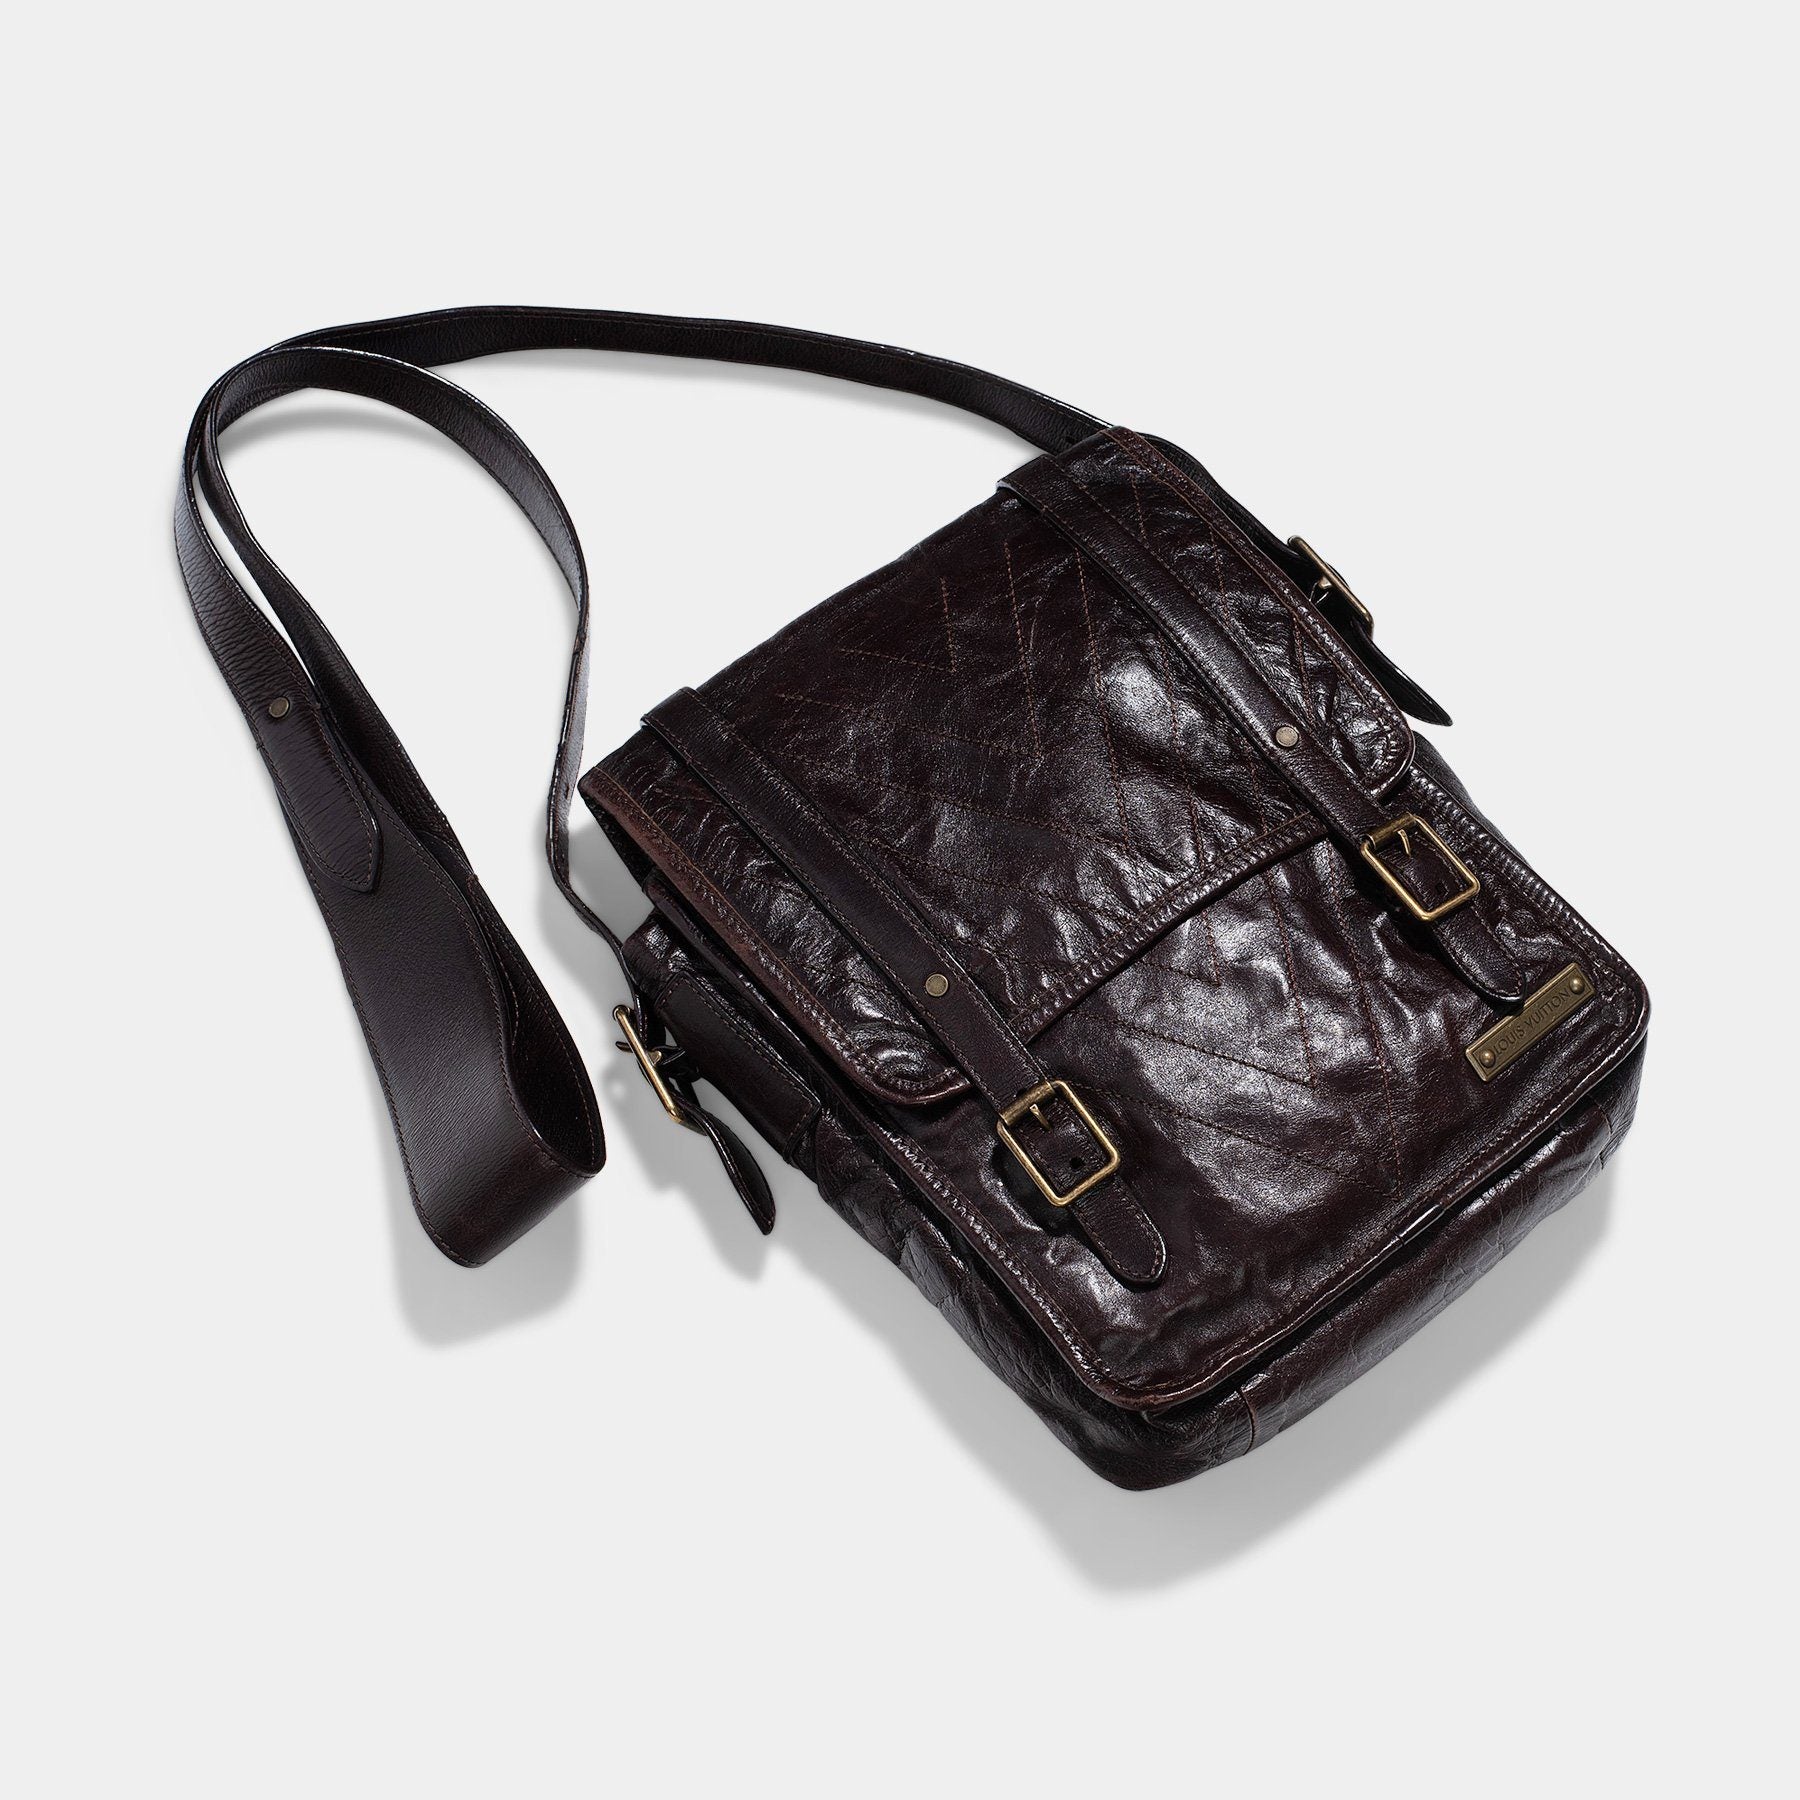 Louis Vuitton Soana Sacoche Limited Edition Kangaroo Bag